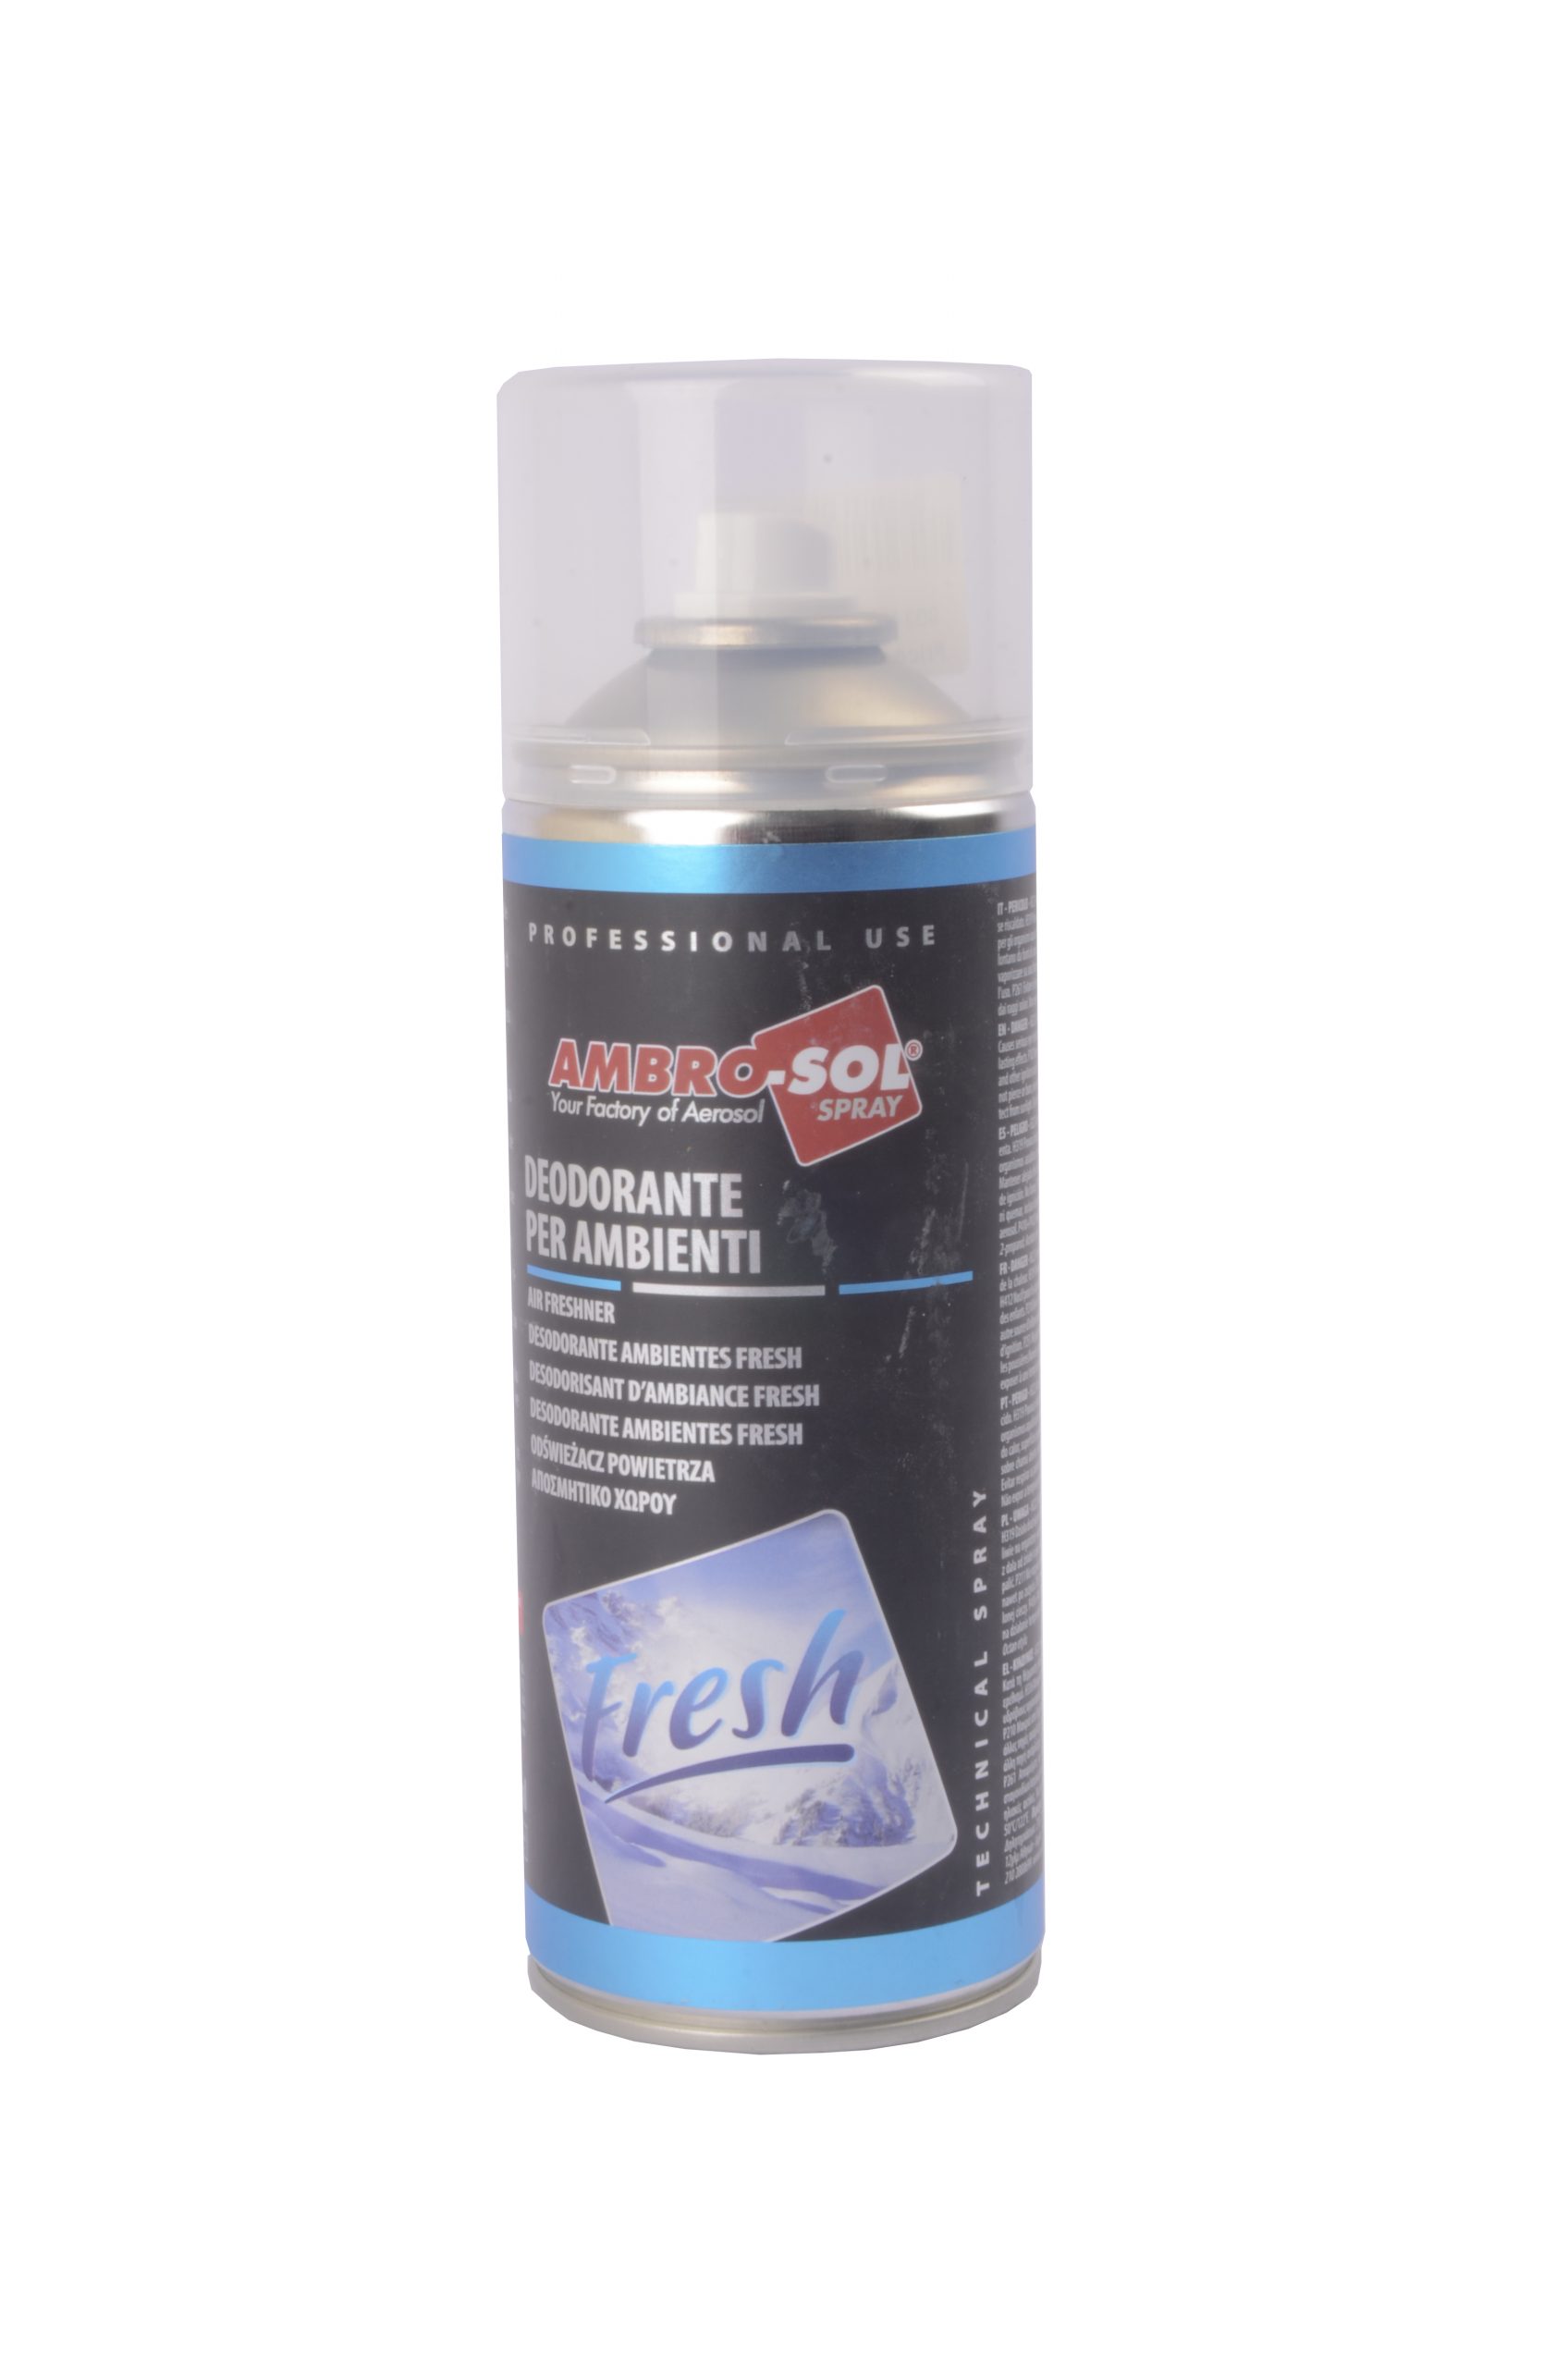 Ambrosol 
	
	Spray Deodorant
	 |  Hardware and Tools |  Industrial Sprays